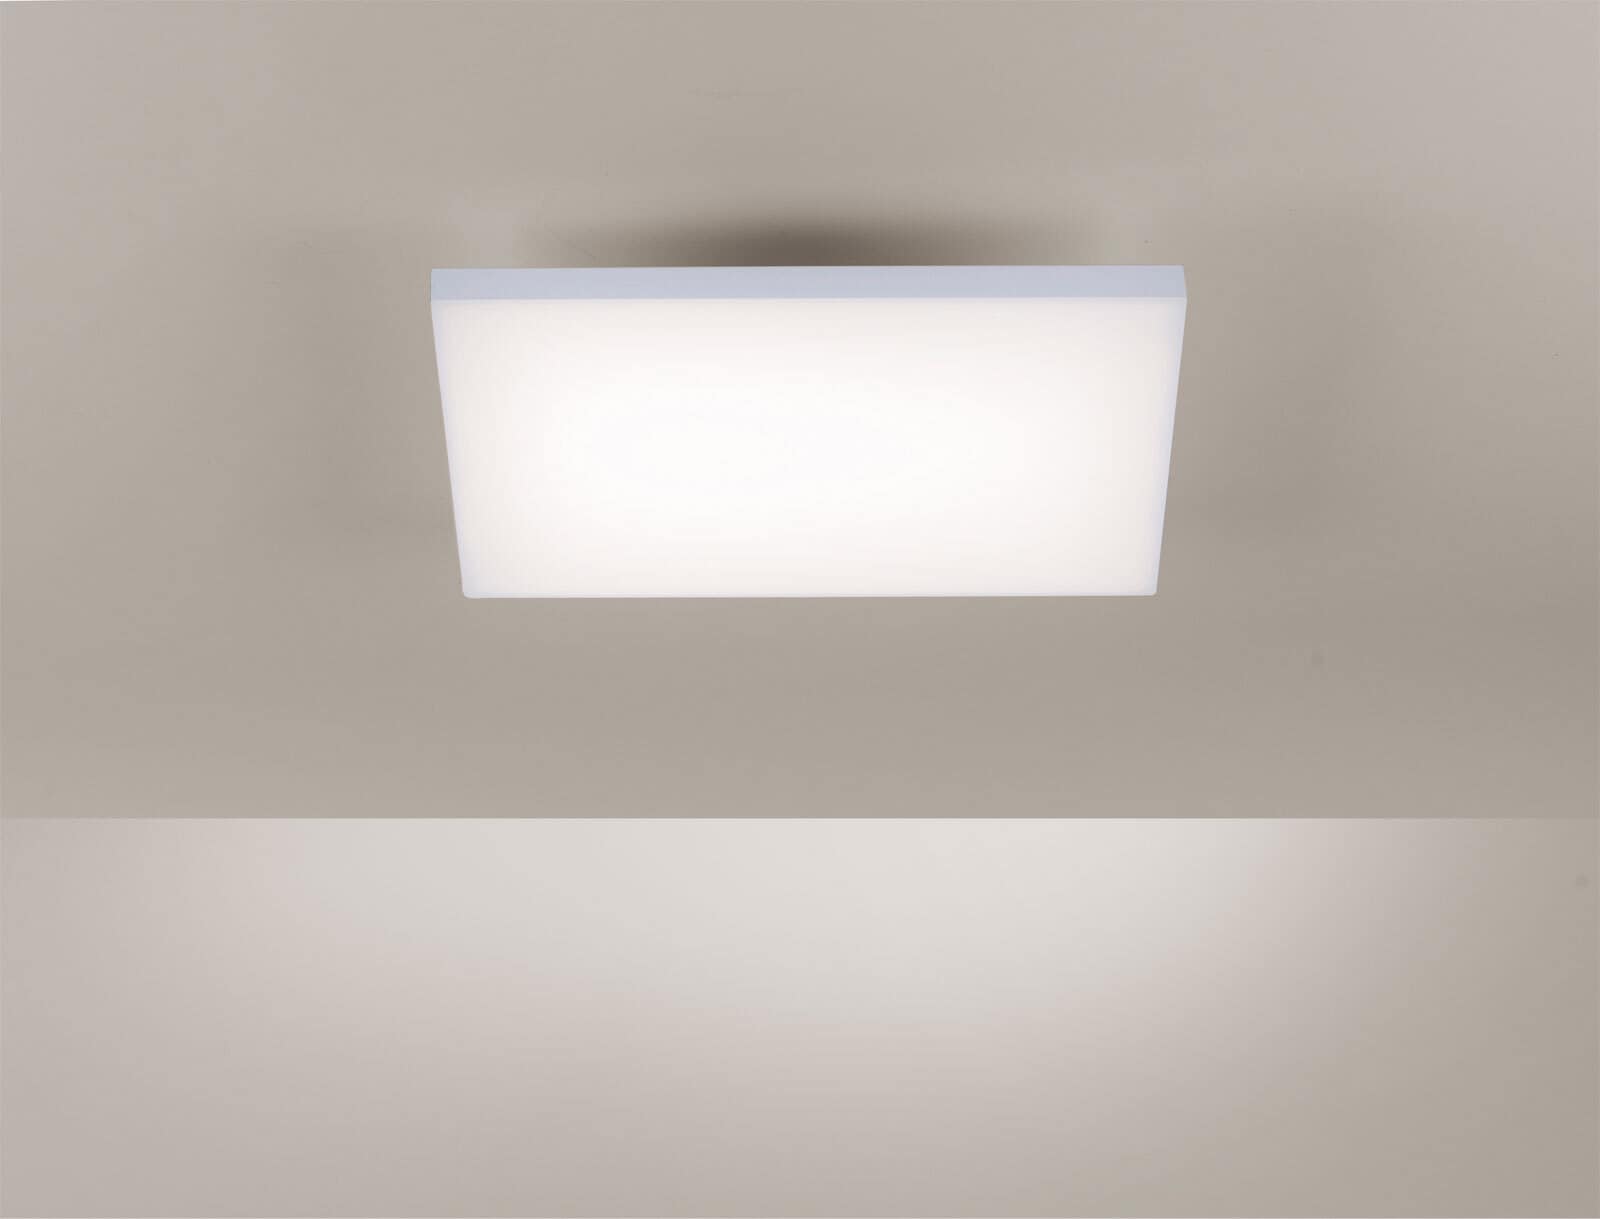 Paul Neuhaus Smart Home LED Deckenlampe Q-FRAMELESS 45 x 45 cm